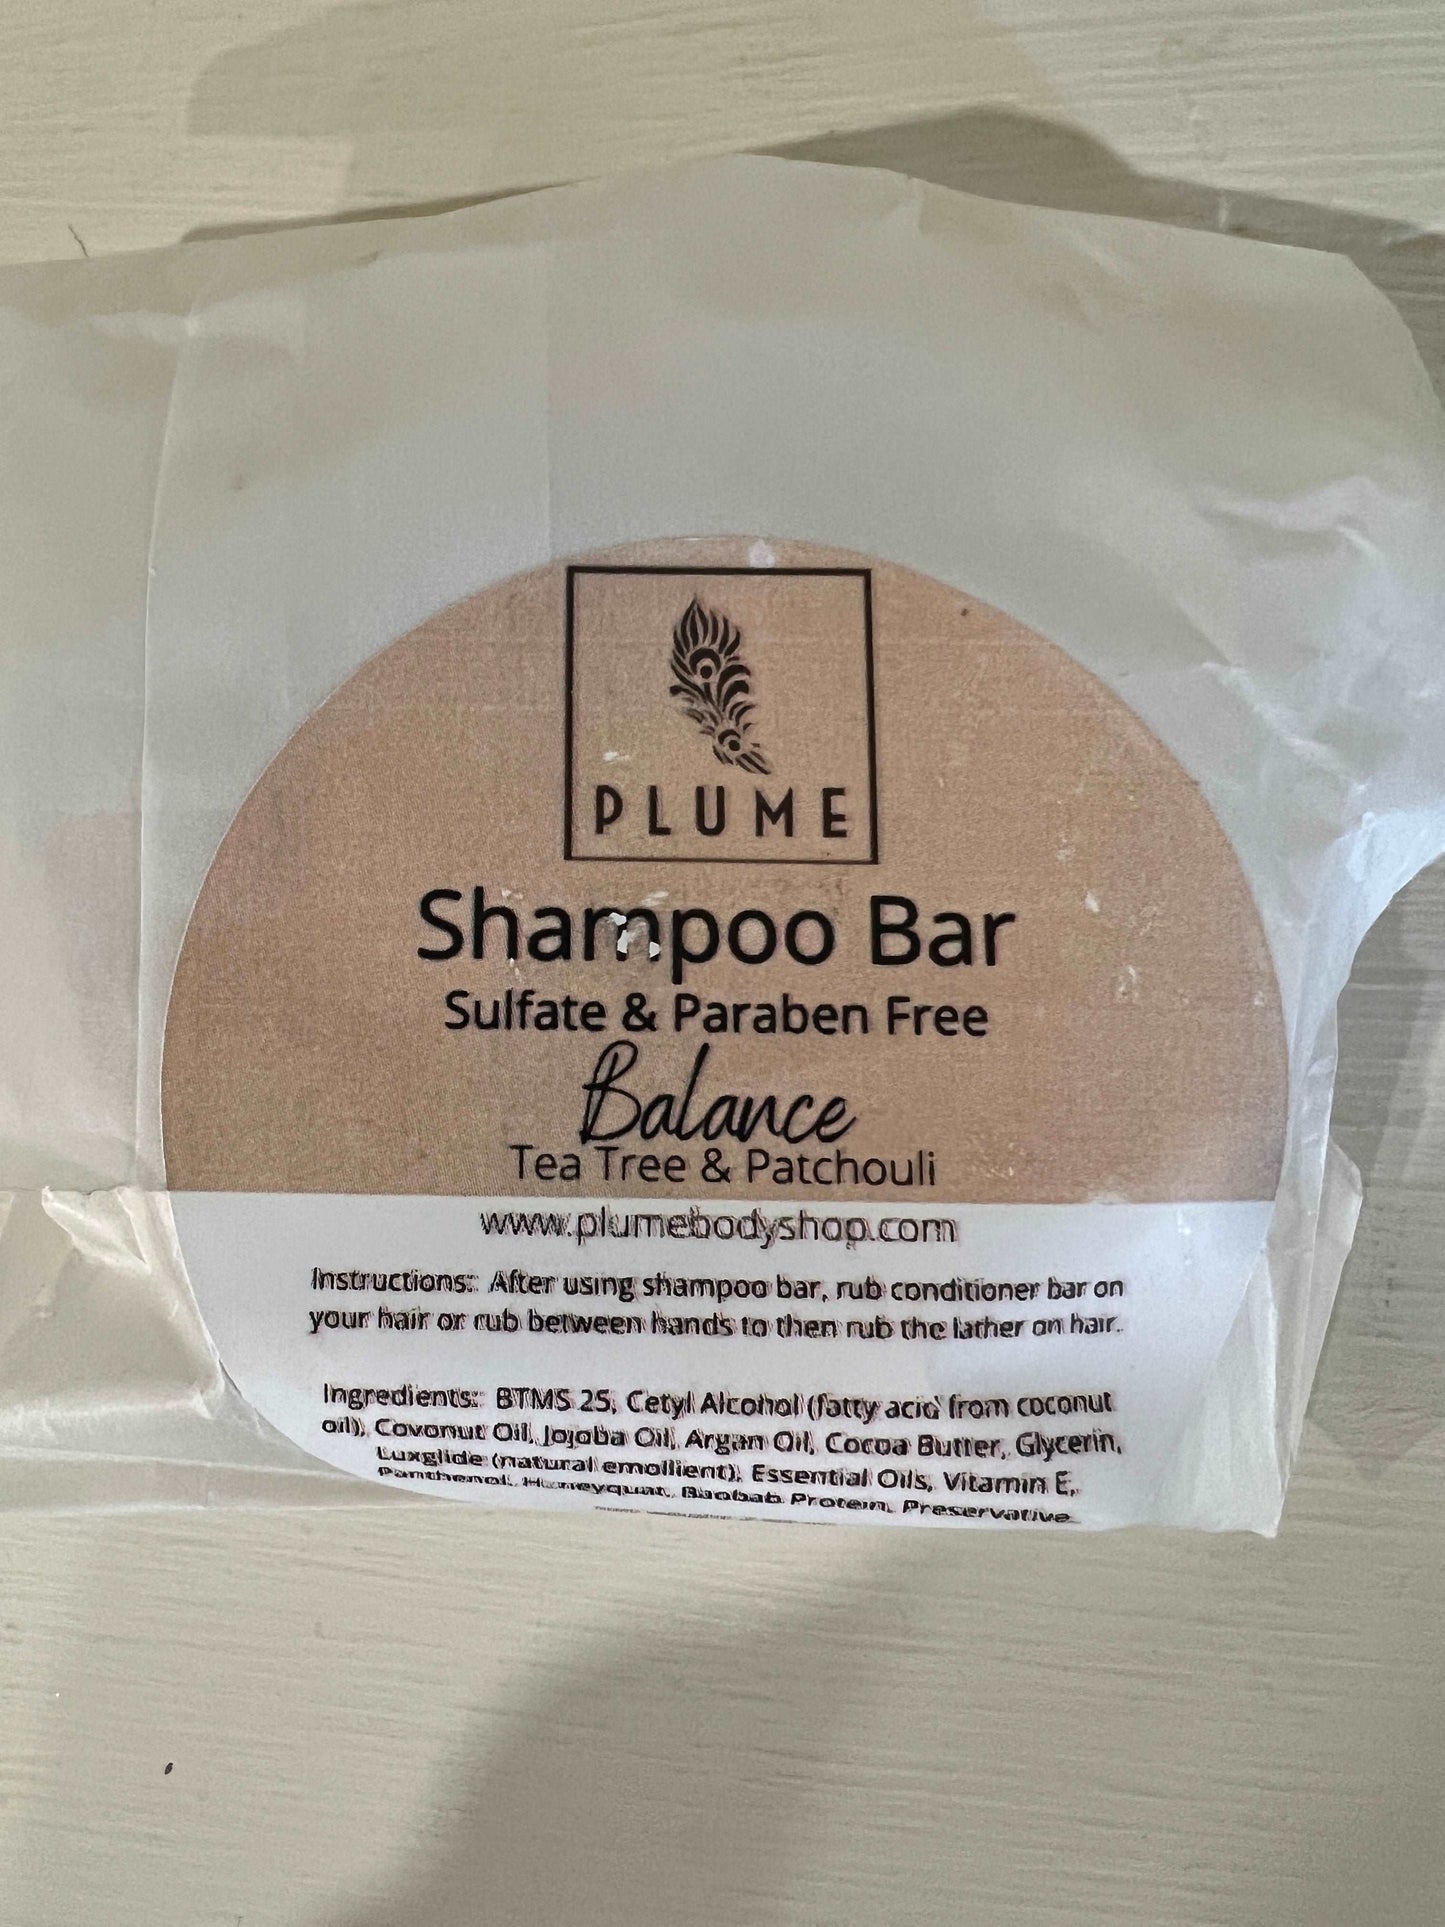 Plume- shampoo bar